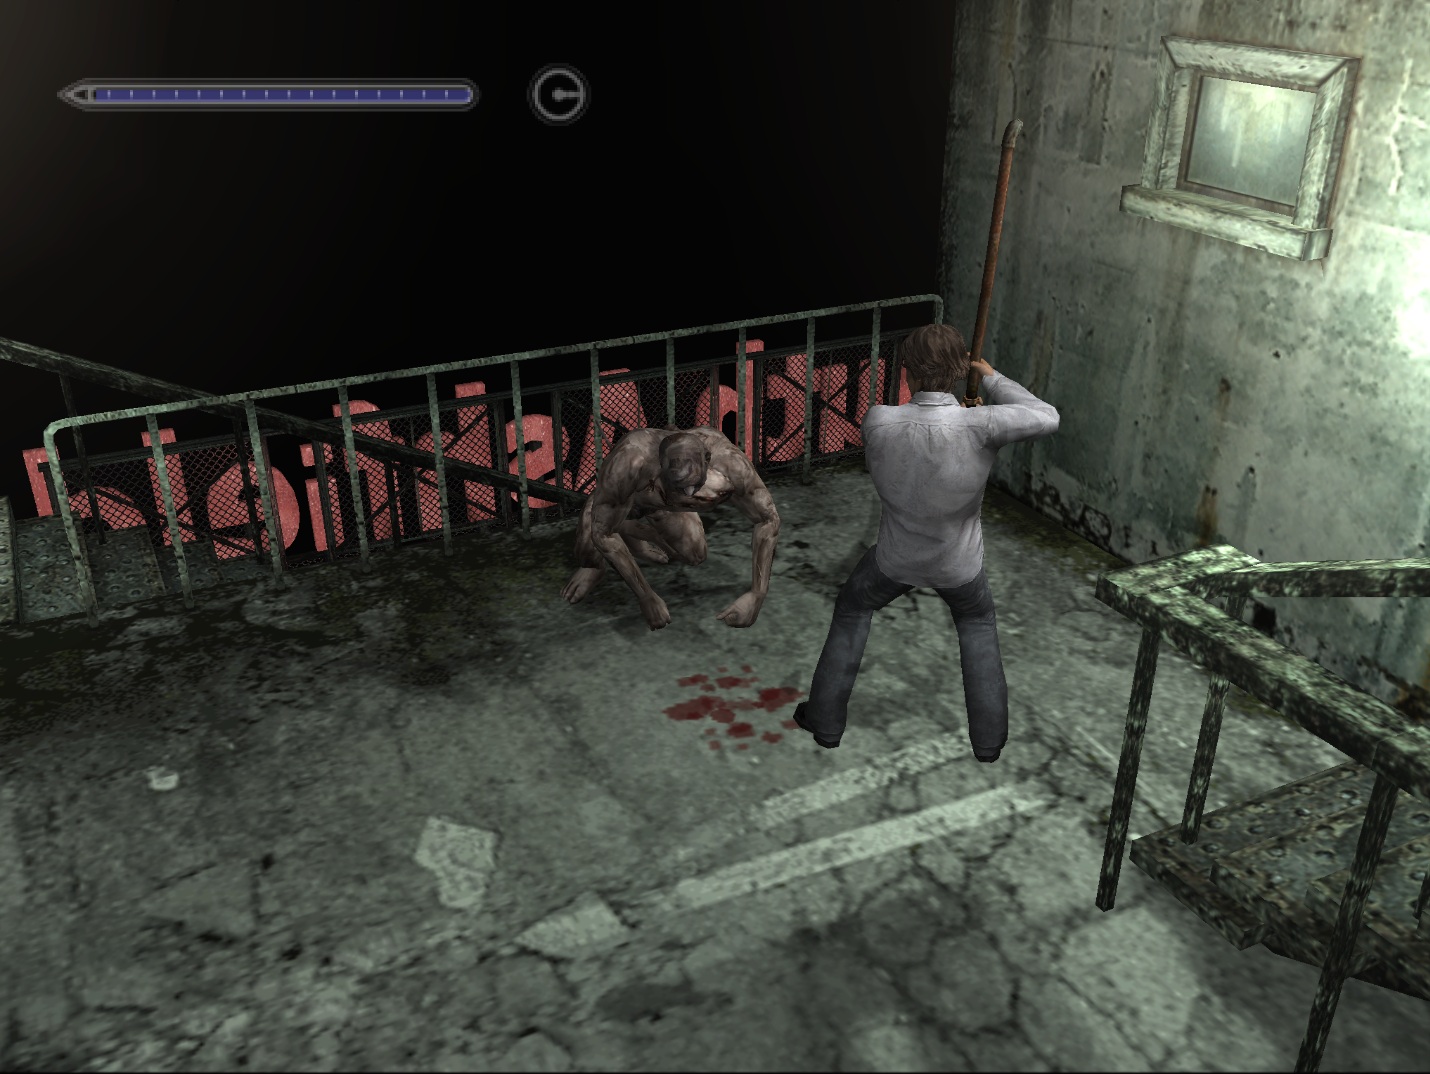 Silent Hill 4 The Room Sony Playstation 2 PS2 Japan ver Konami